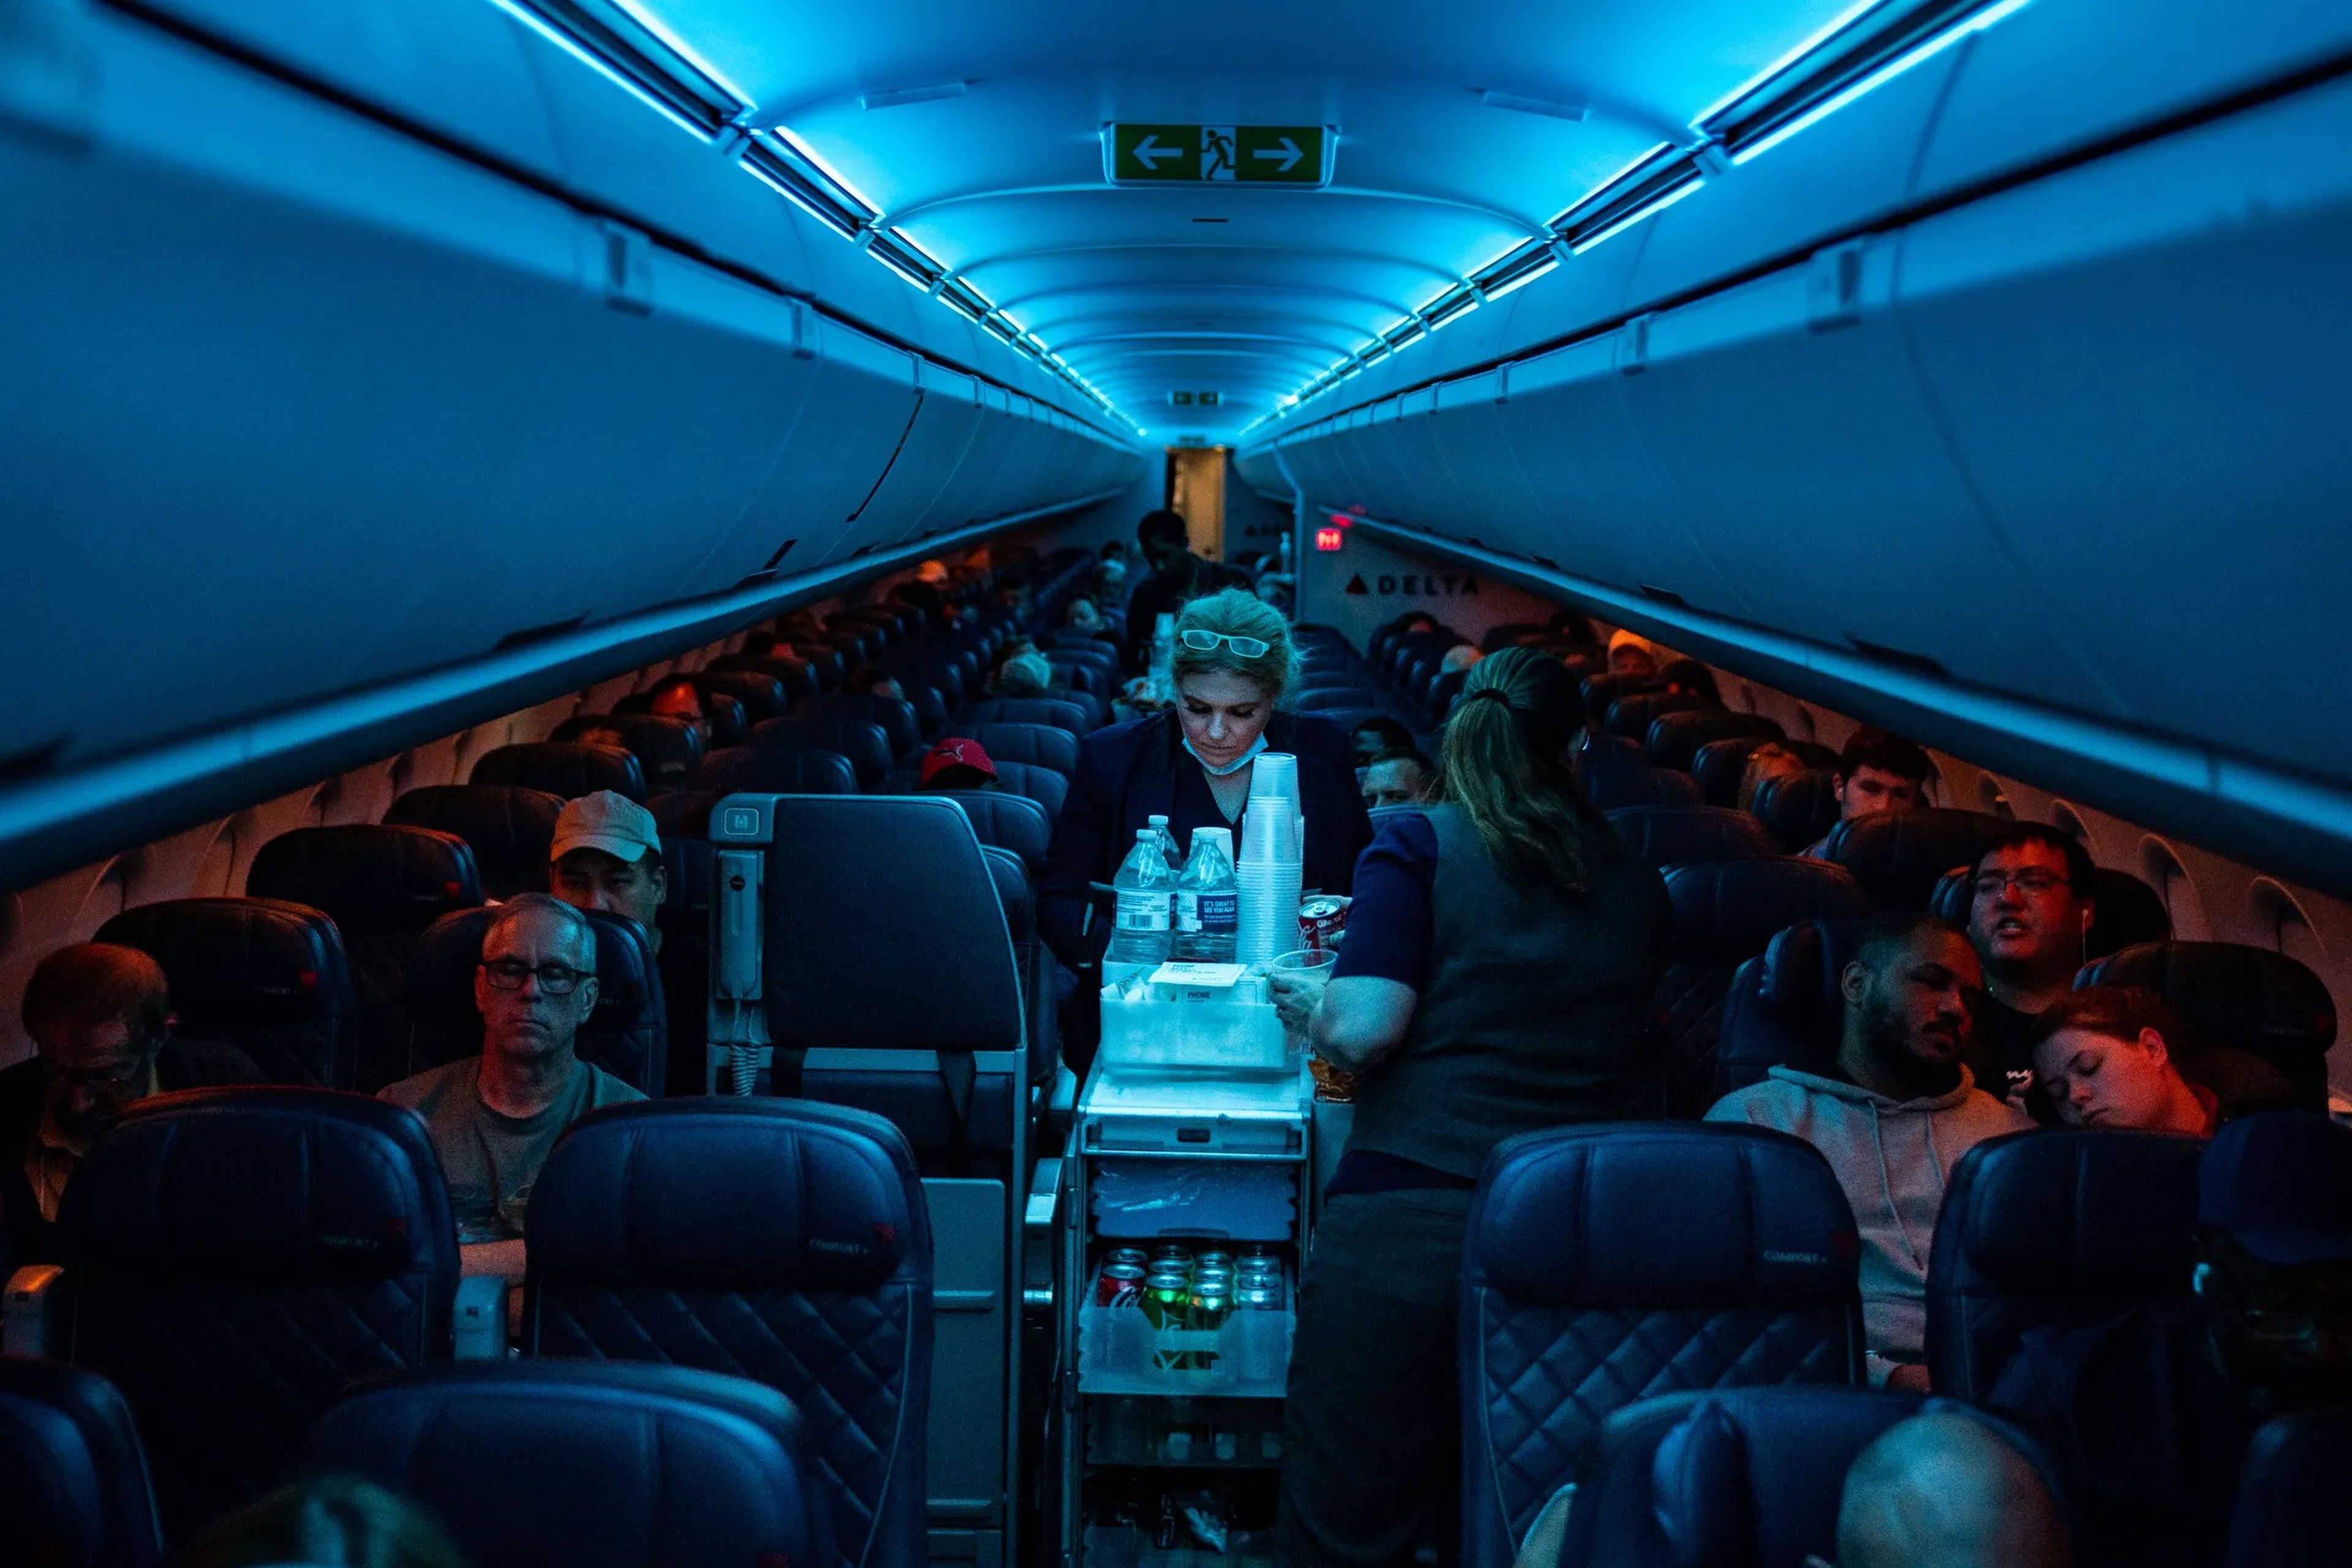 Flight attendants serve refreshments on a Delta Airlines flight.